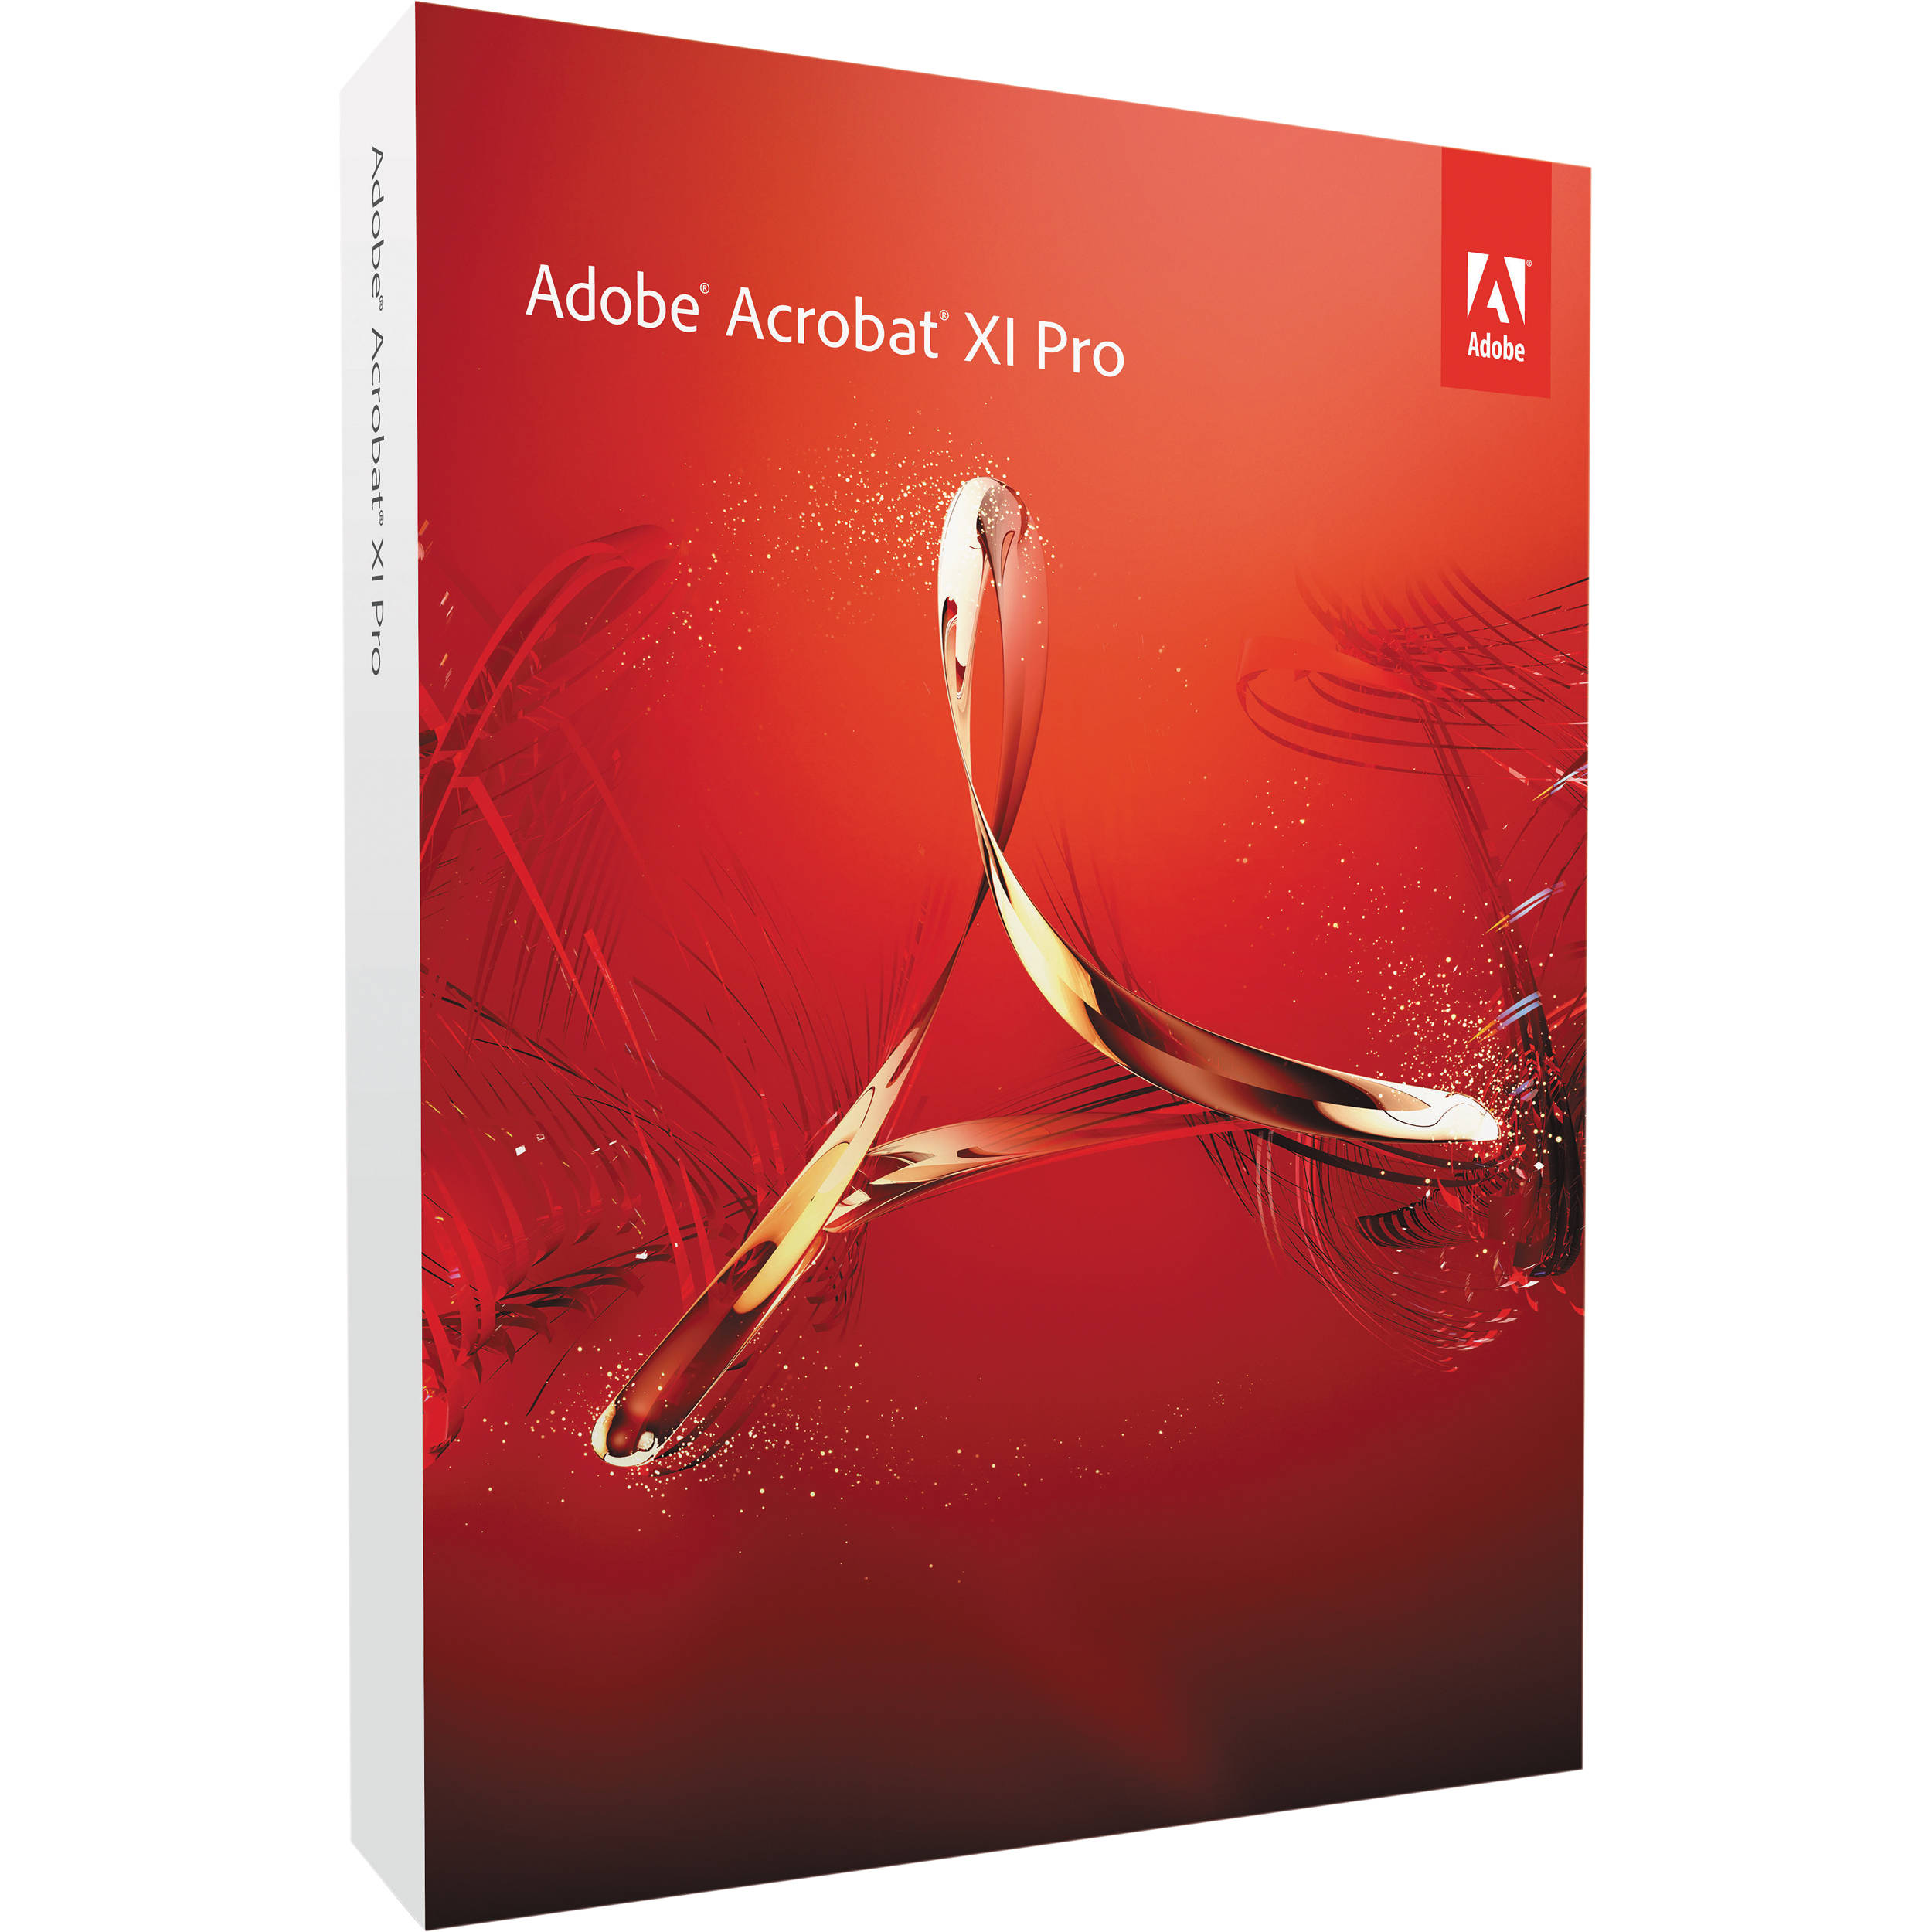 Adobe acrobat xi pro for mac